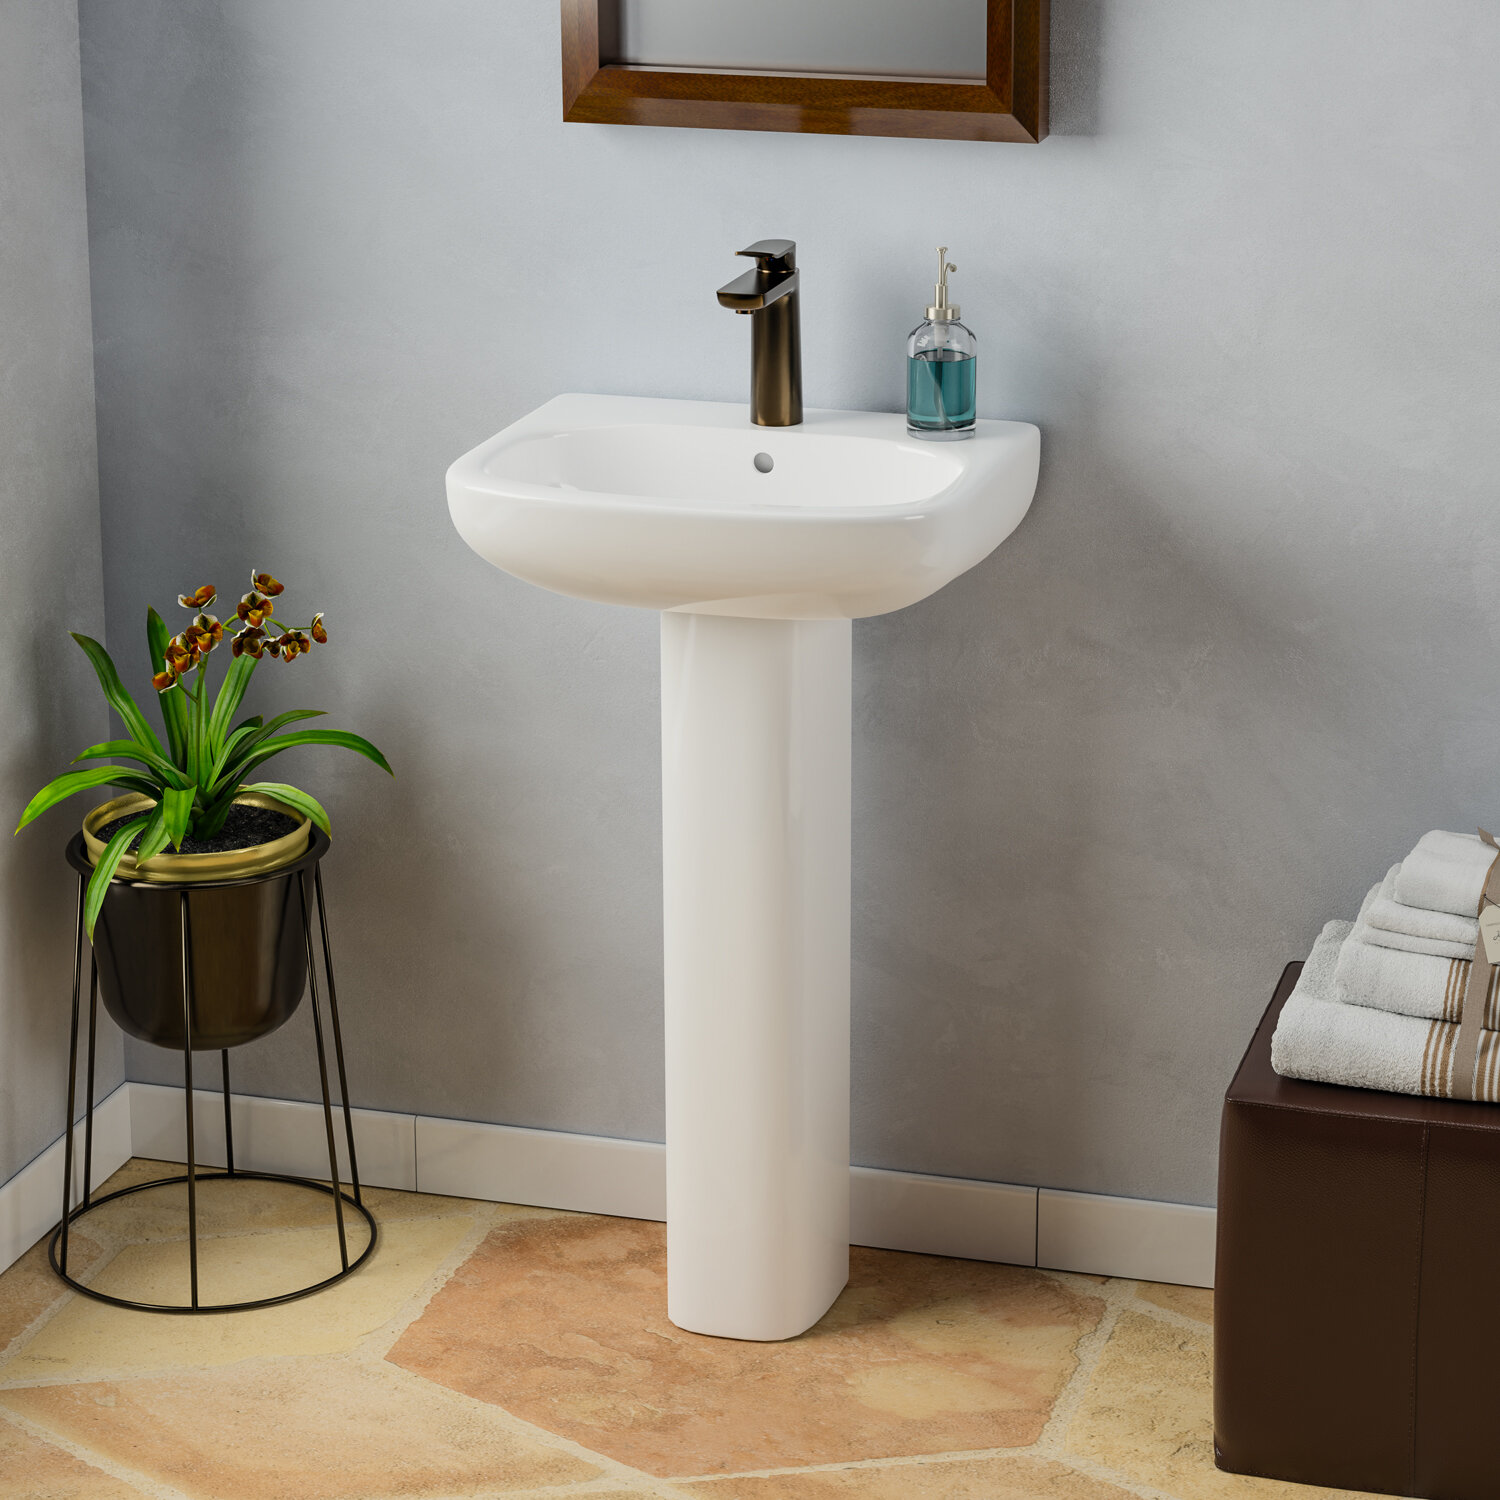 Barclay Tonique Vitreous China U Shaped Pedestal Bathroom Sink With Overflow Reviews Wayfair